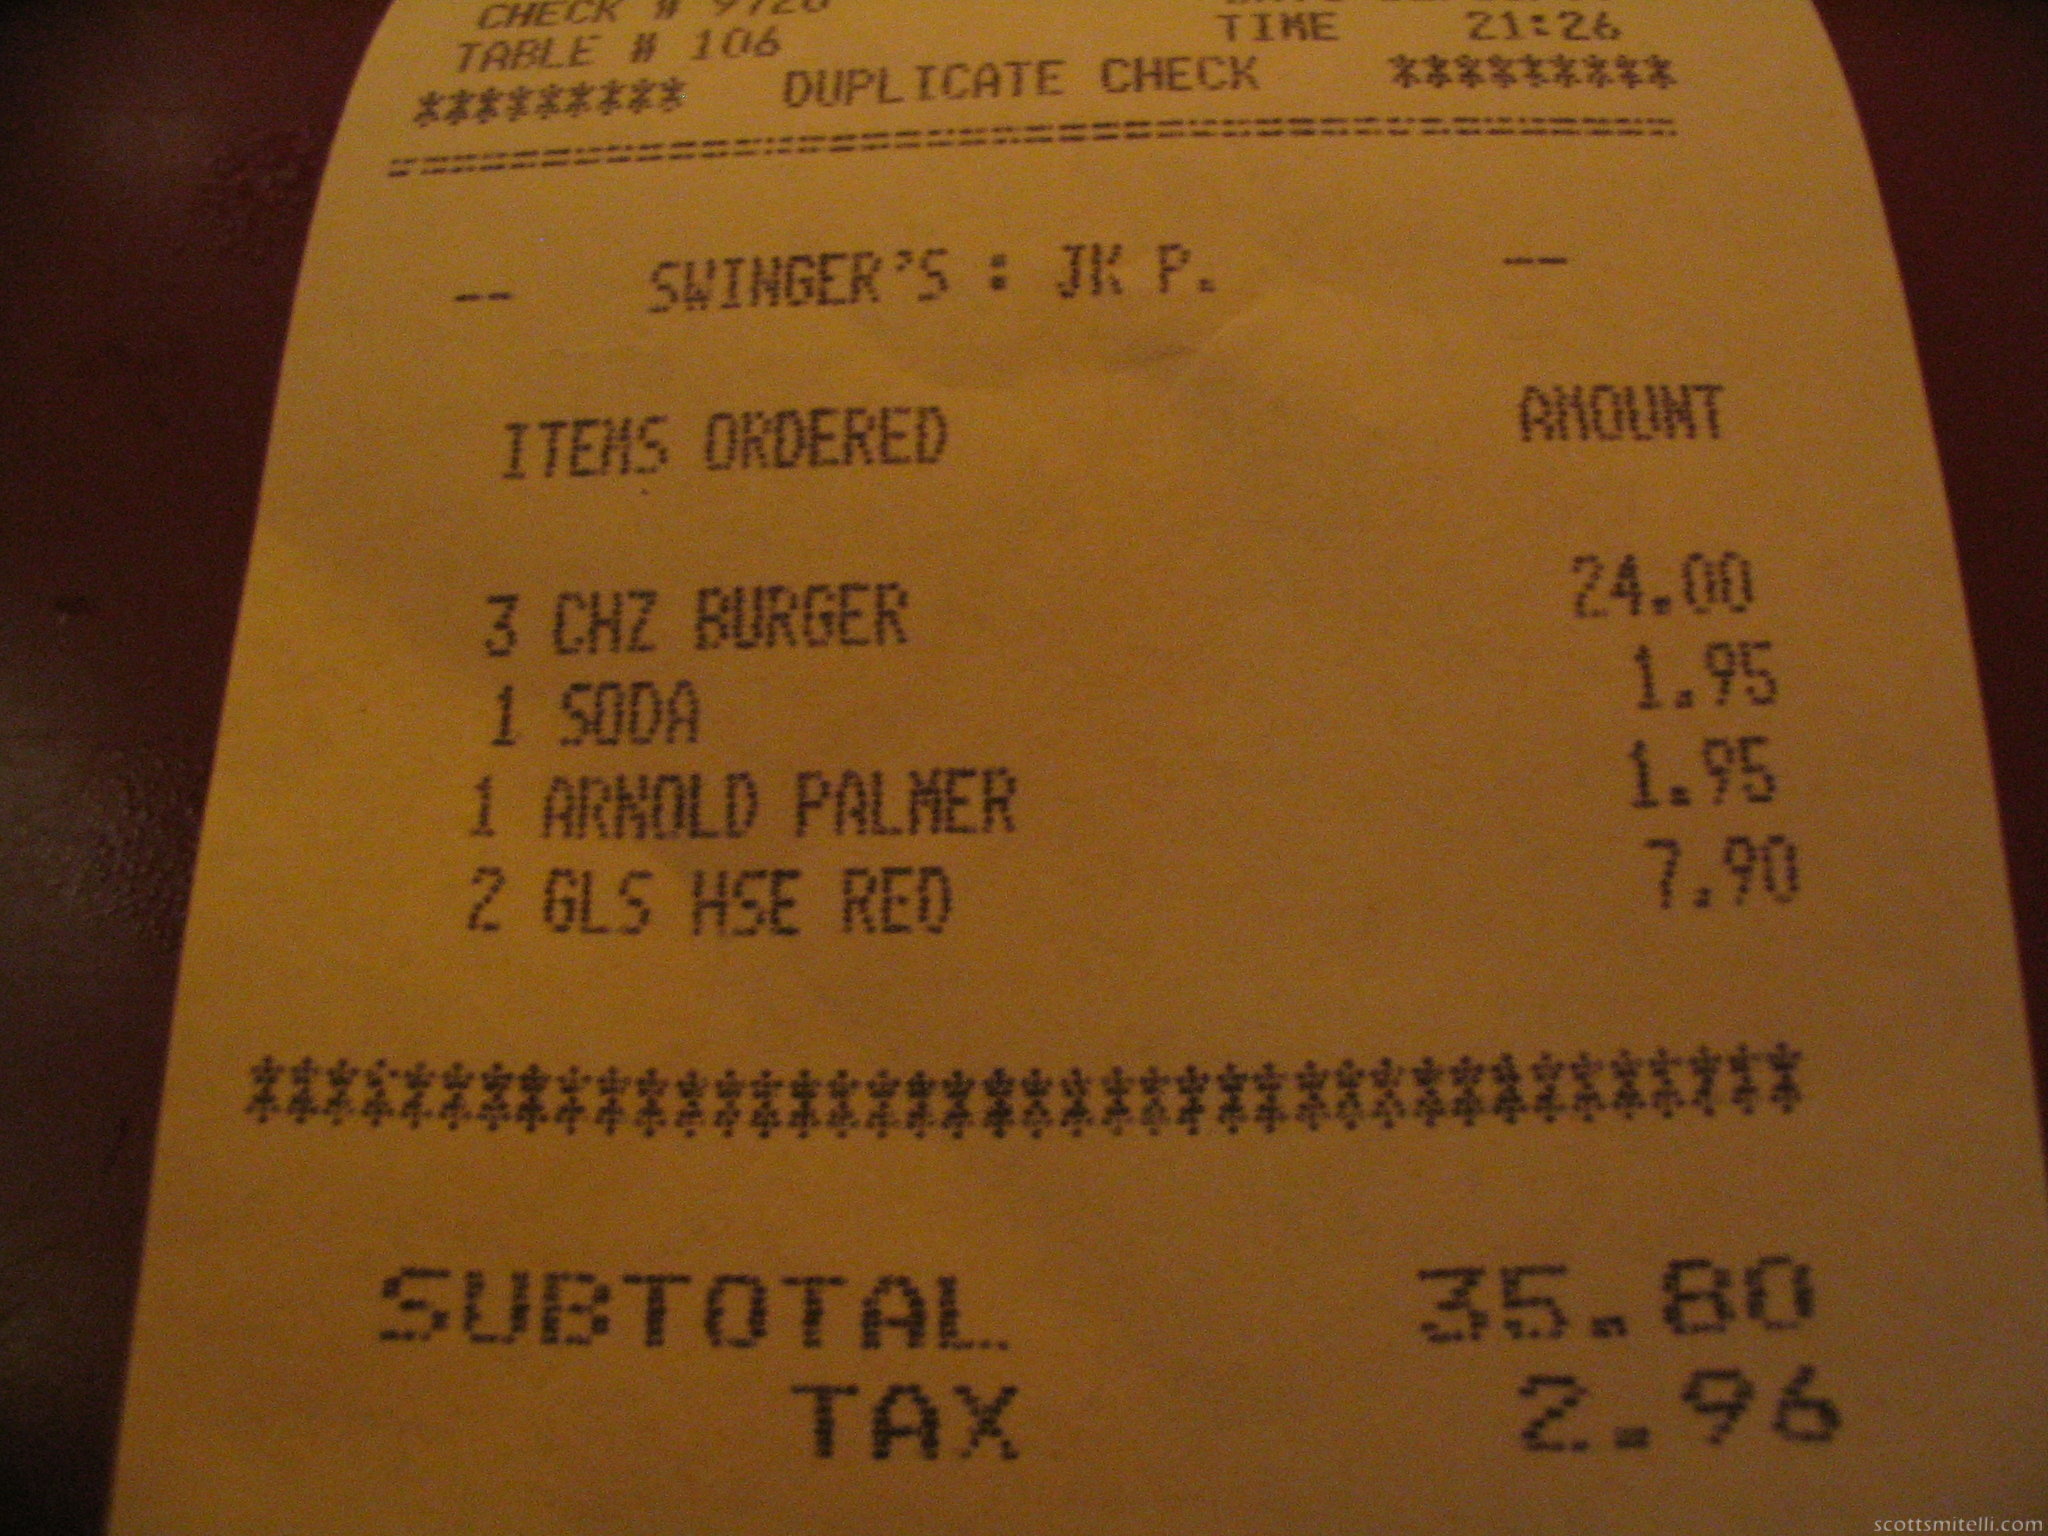 I can has three chz burger?